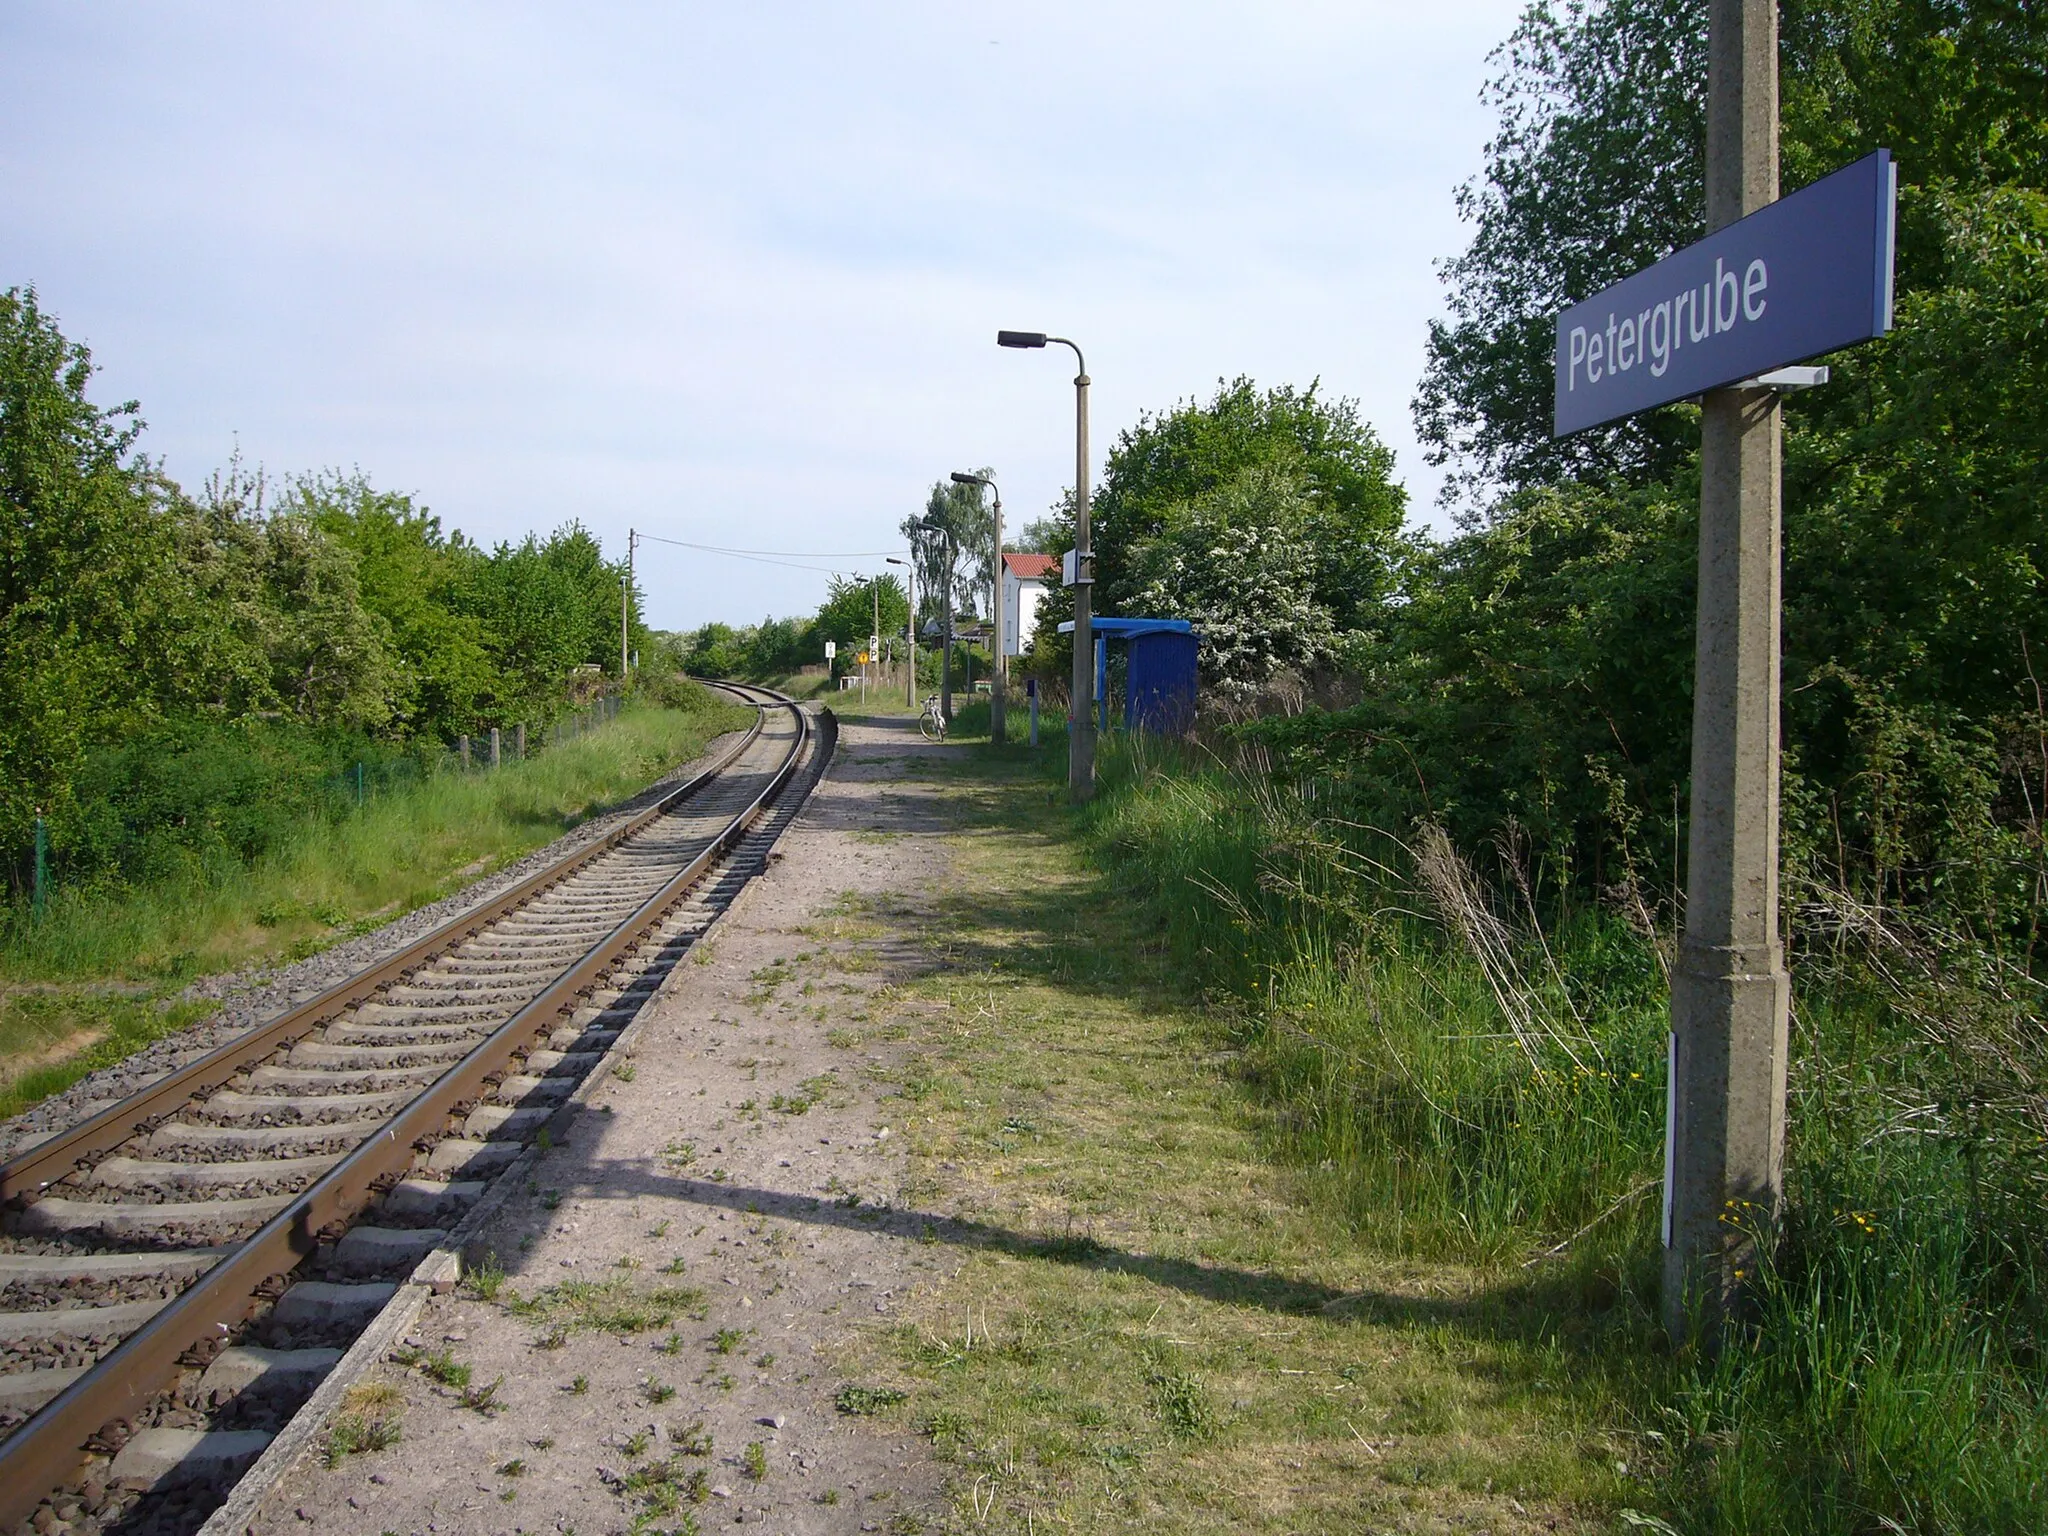 Photo showing: Petergrube railway stop, Saxony, Germany